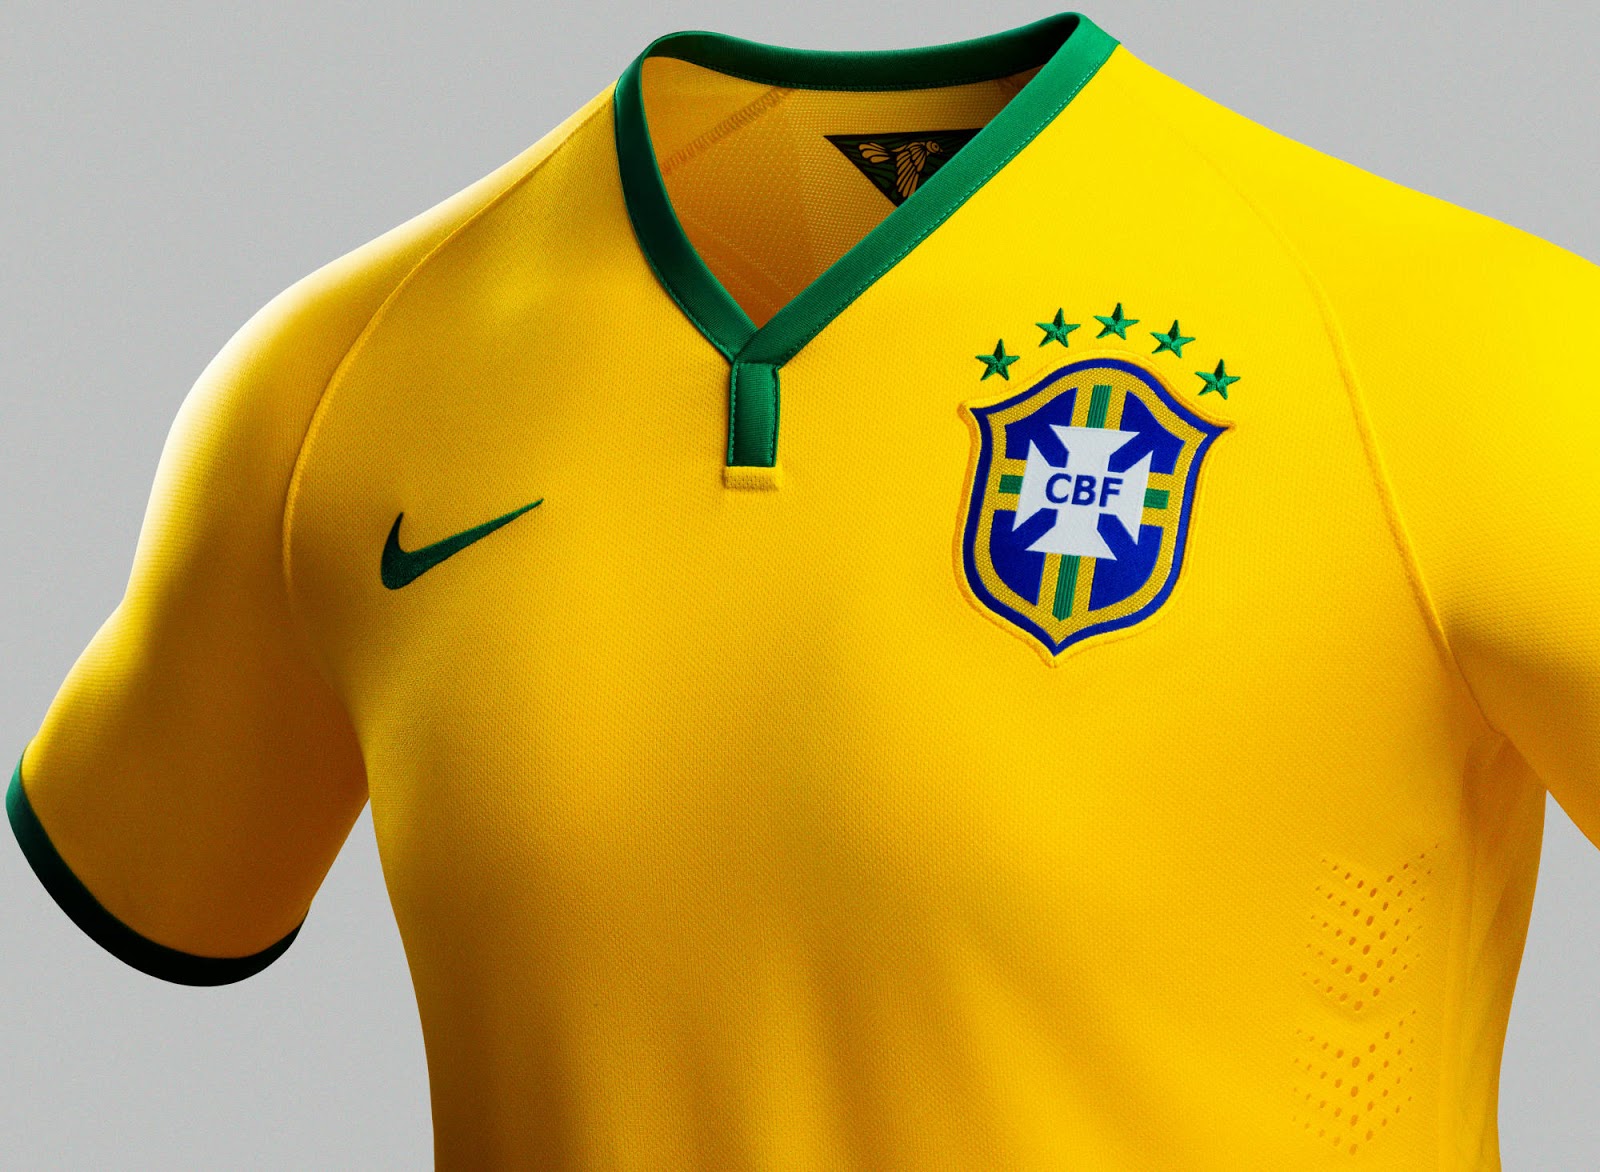 brazil jersey colour